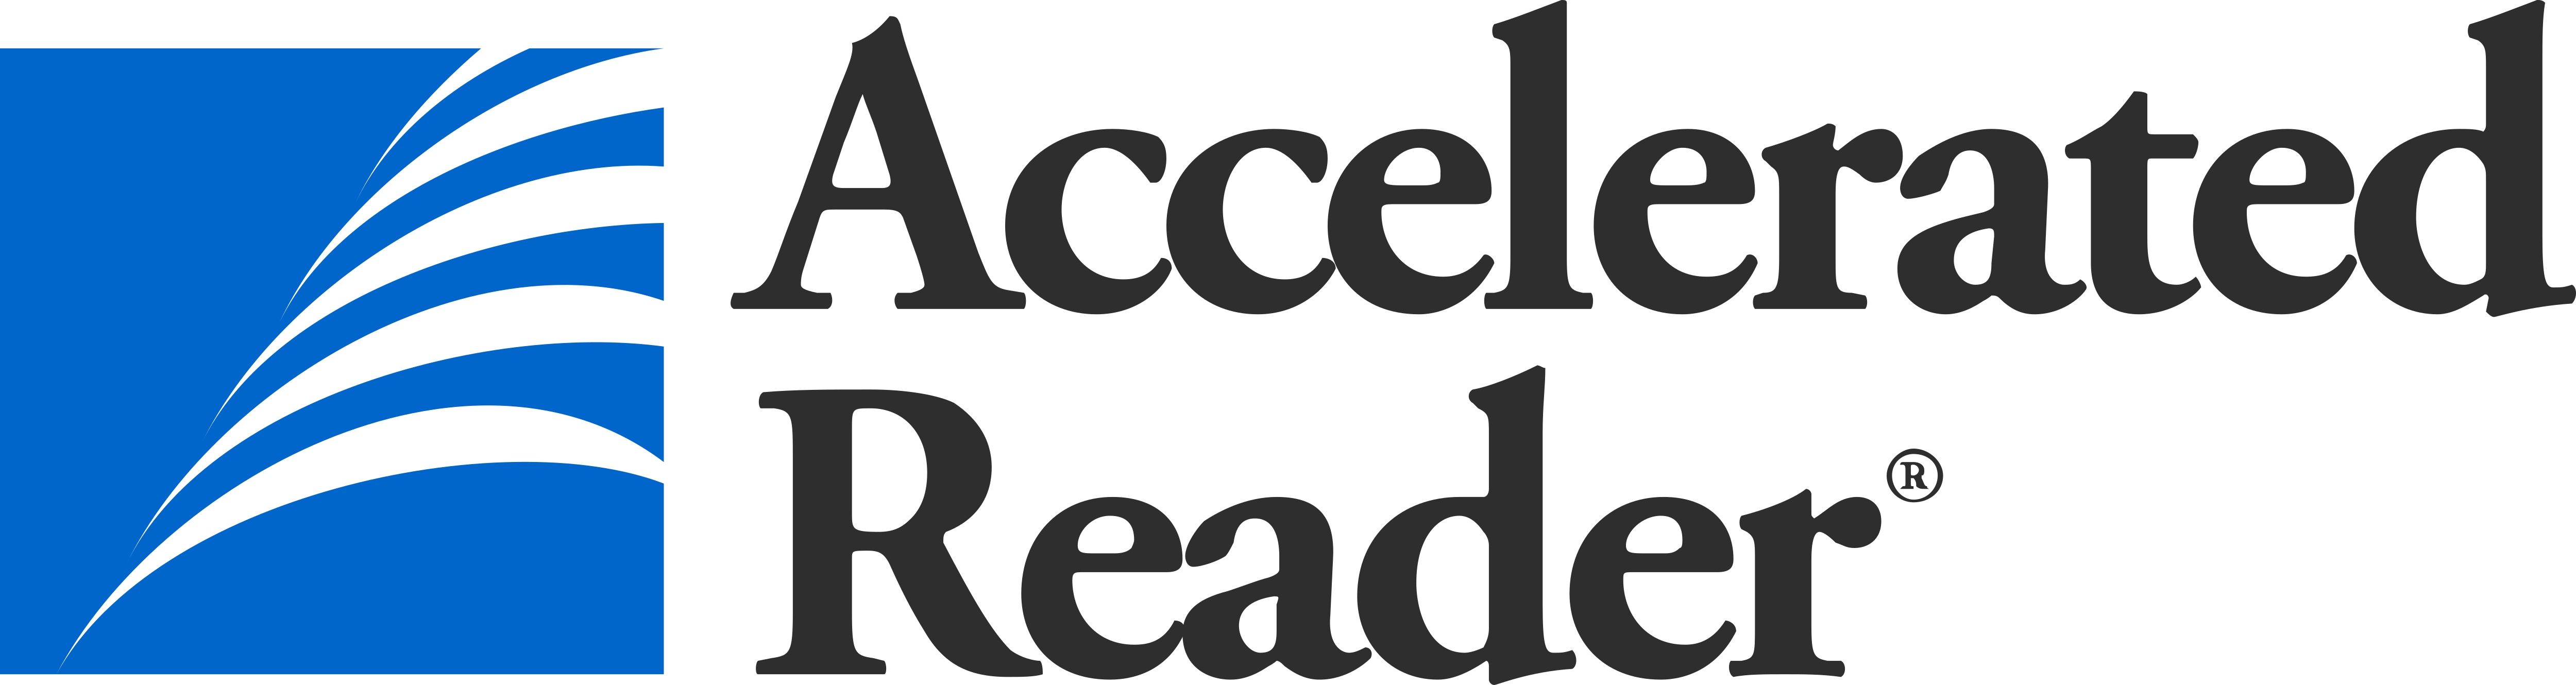 Accelerated Reader Logo